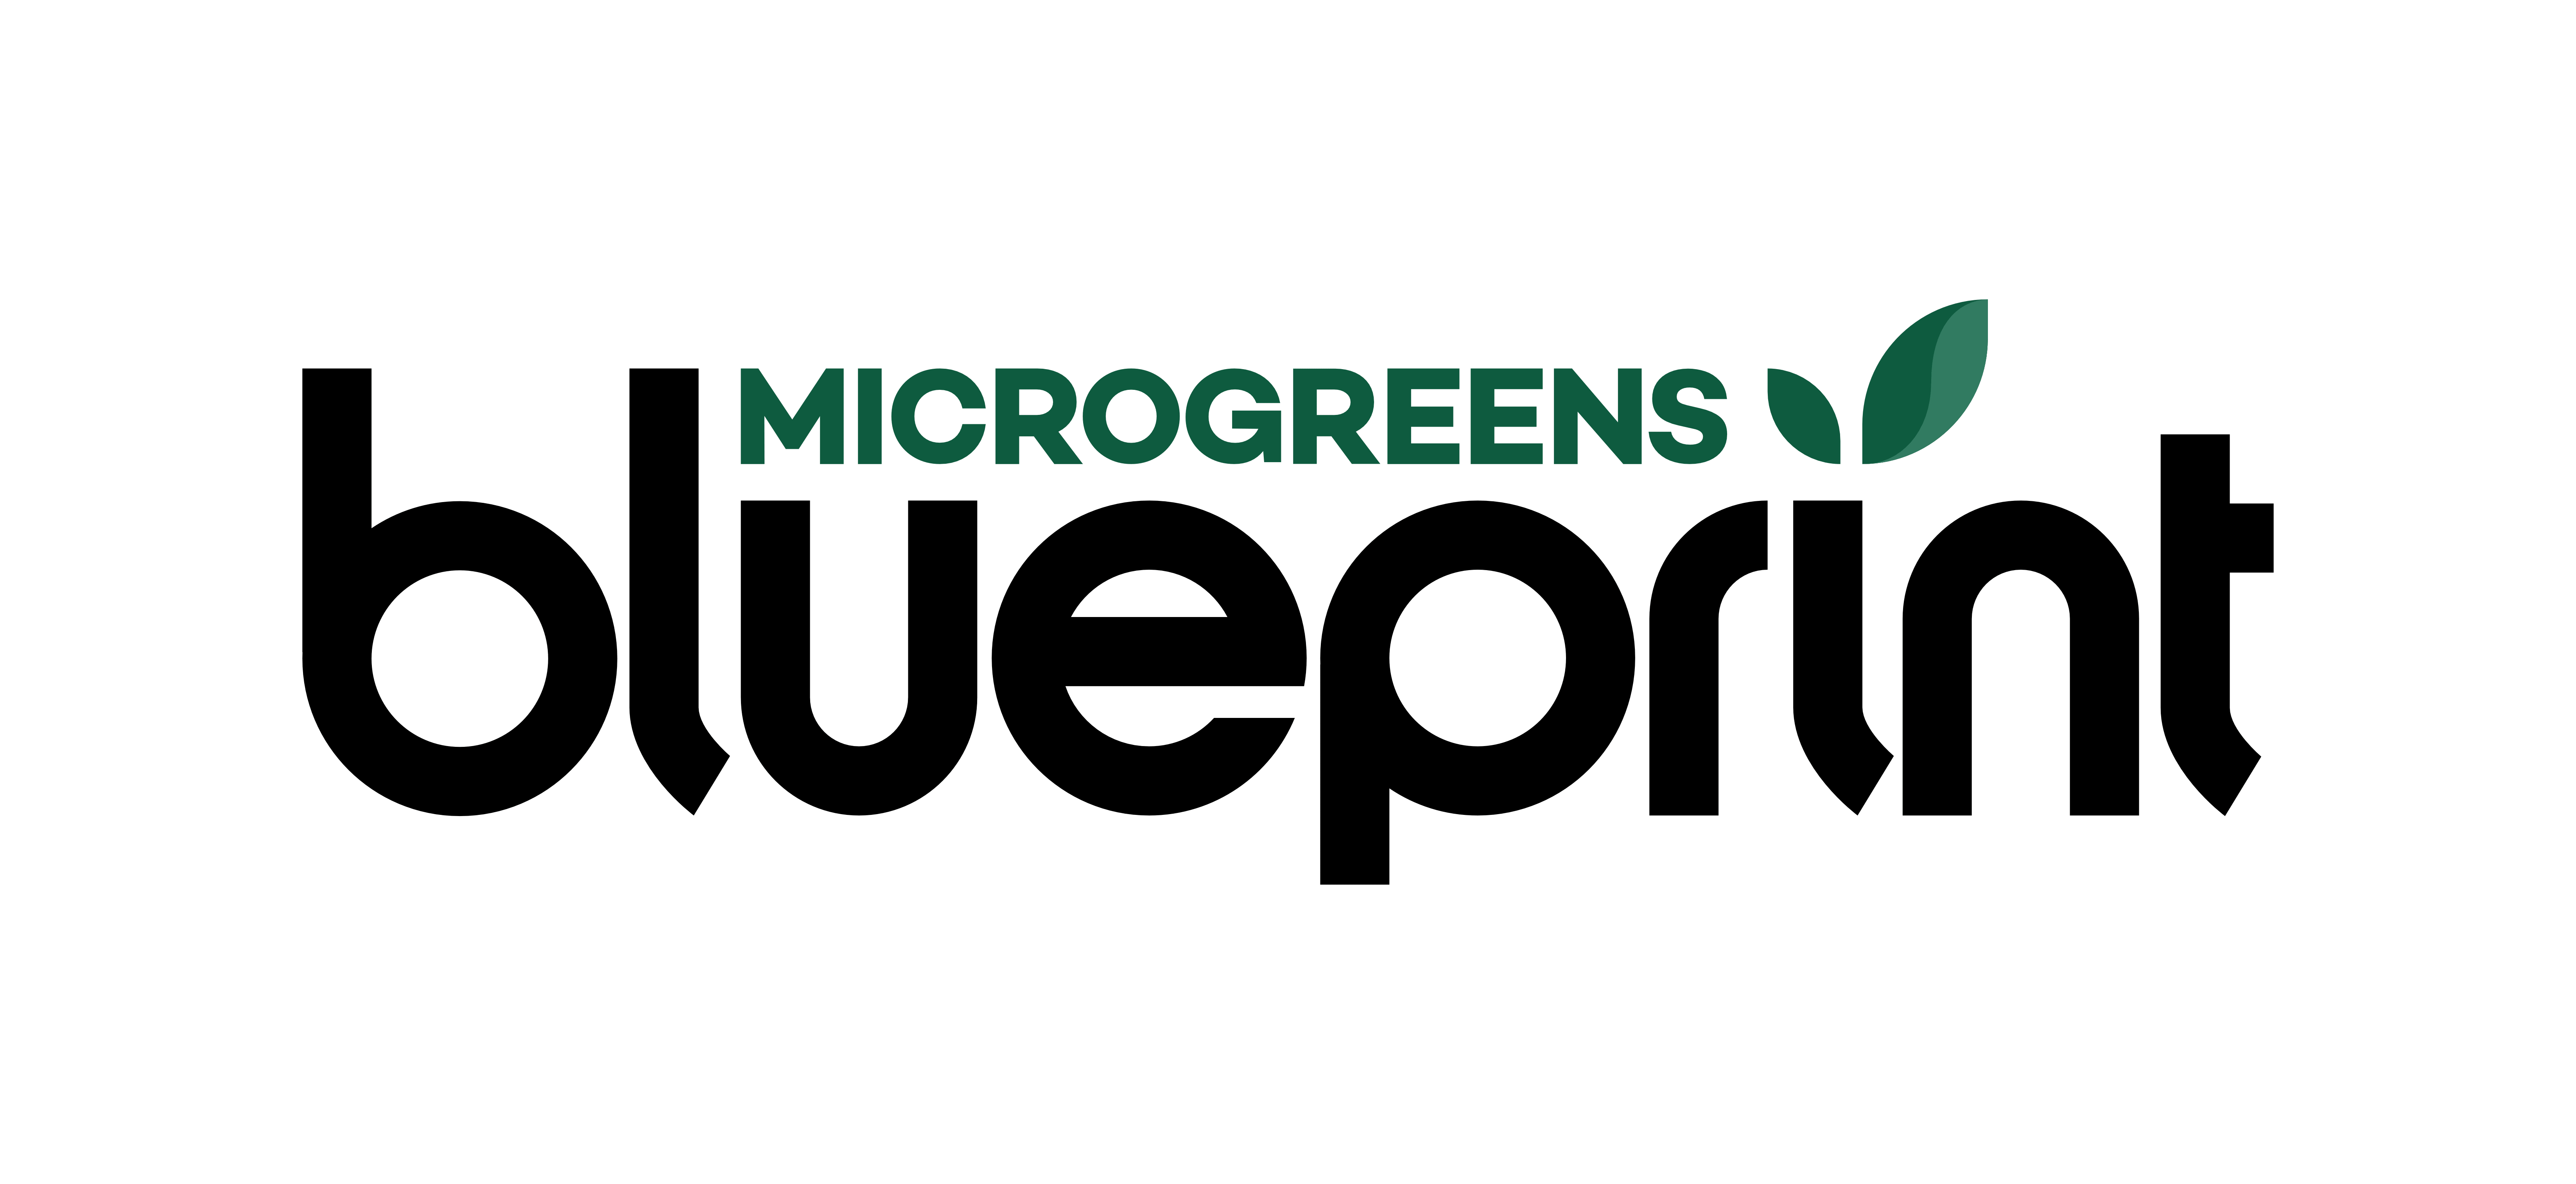 microgreens blueprint bundle logo